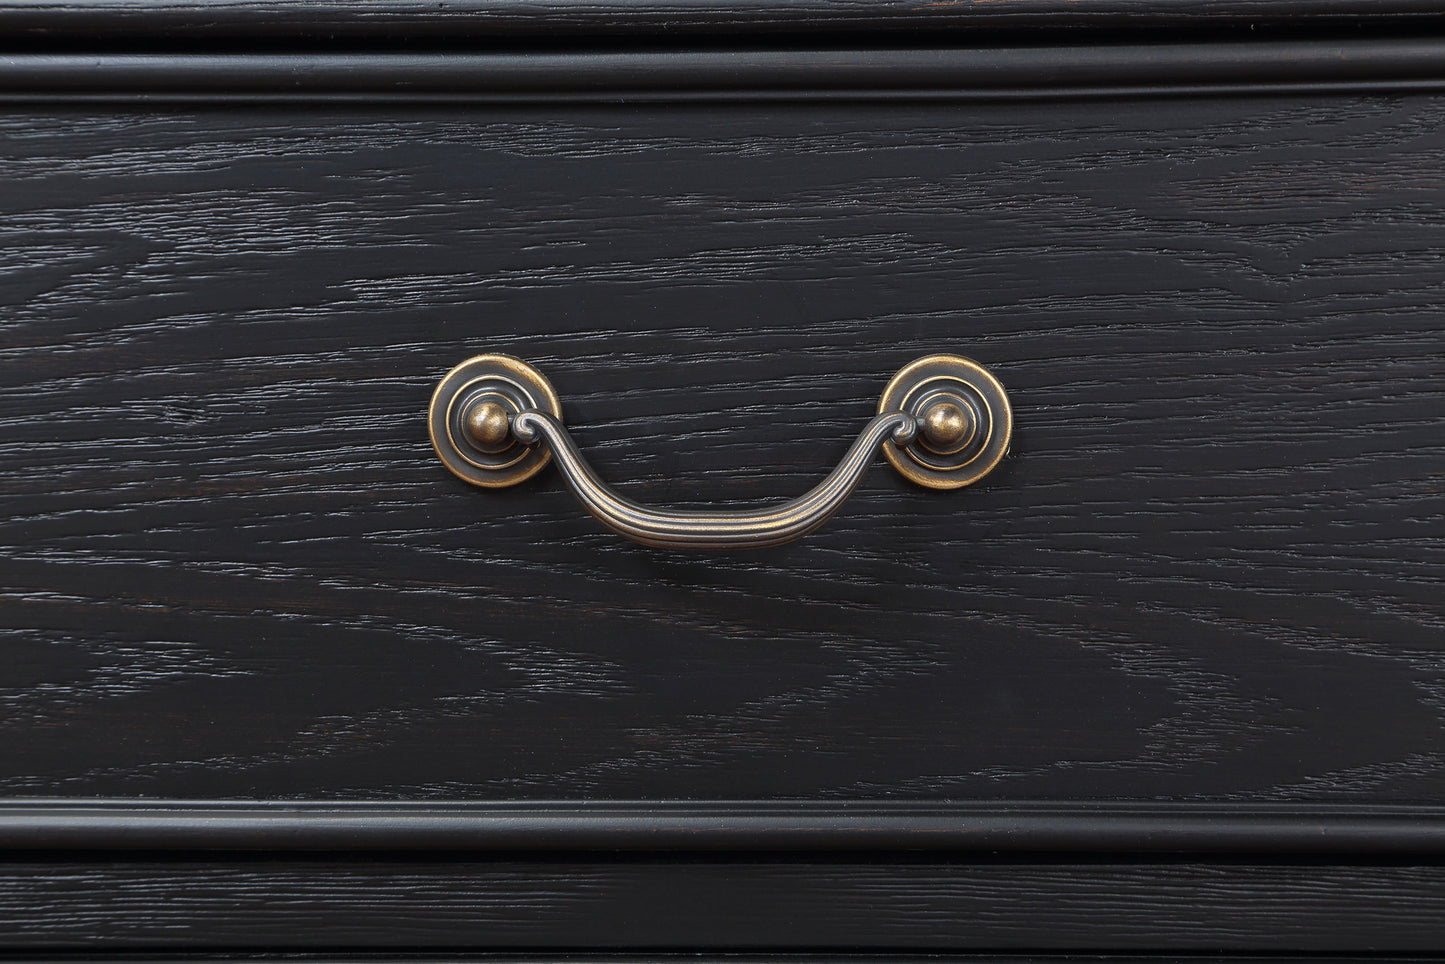 Celina 9-drawer Dresser with Mirror Black